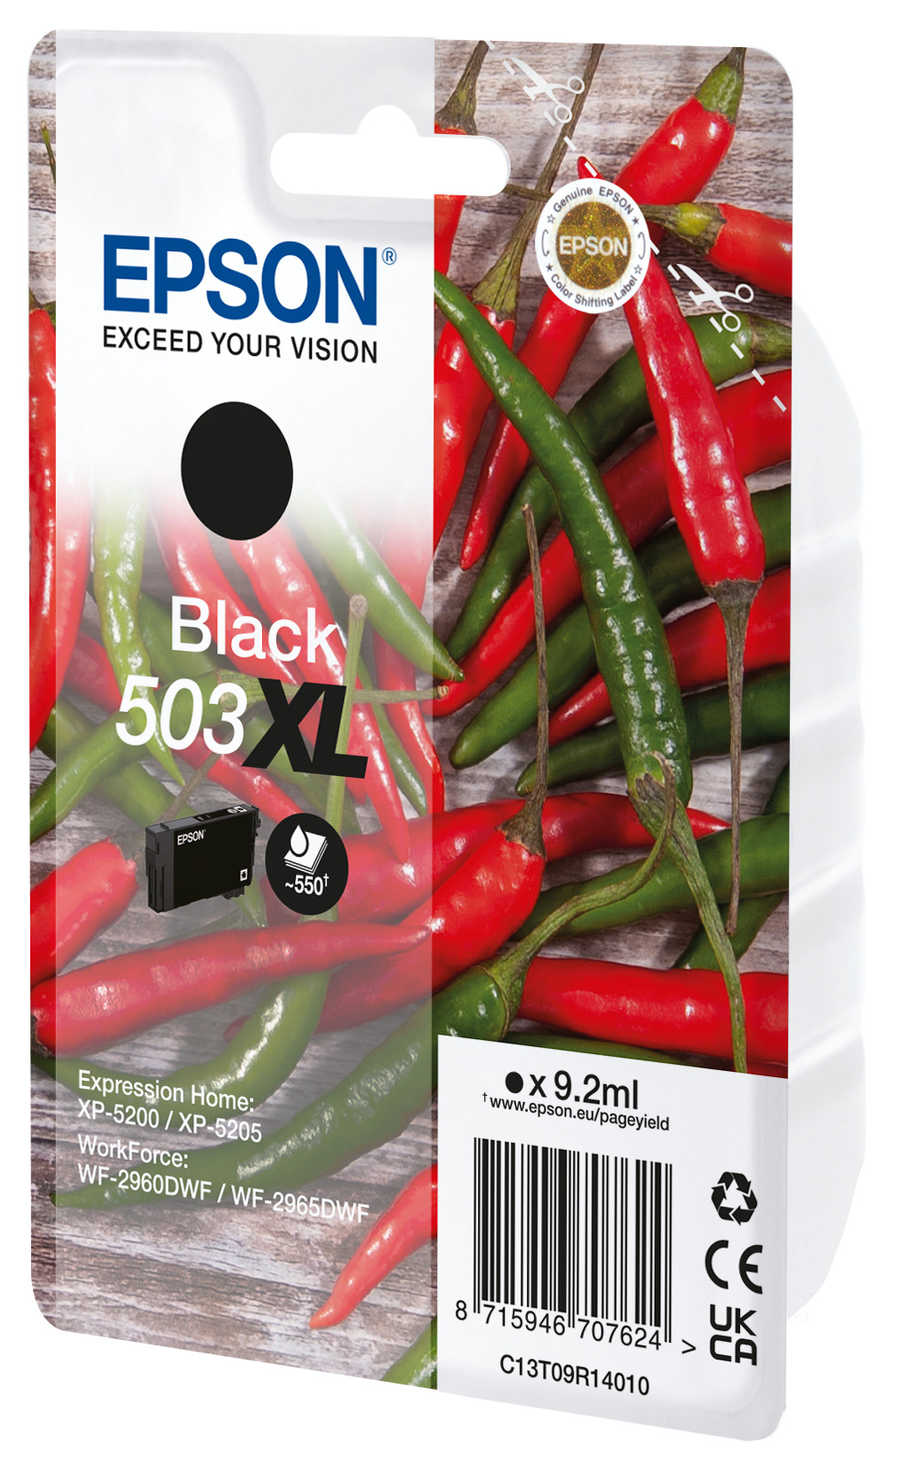 Epson E503XL Druckerpatronen XL bk - Epson No. 503XL, T09R140 für z.B. Epson Expression Home XP -5200, Epson Expression 